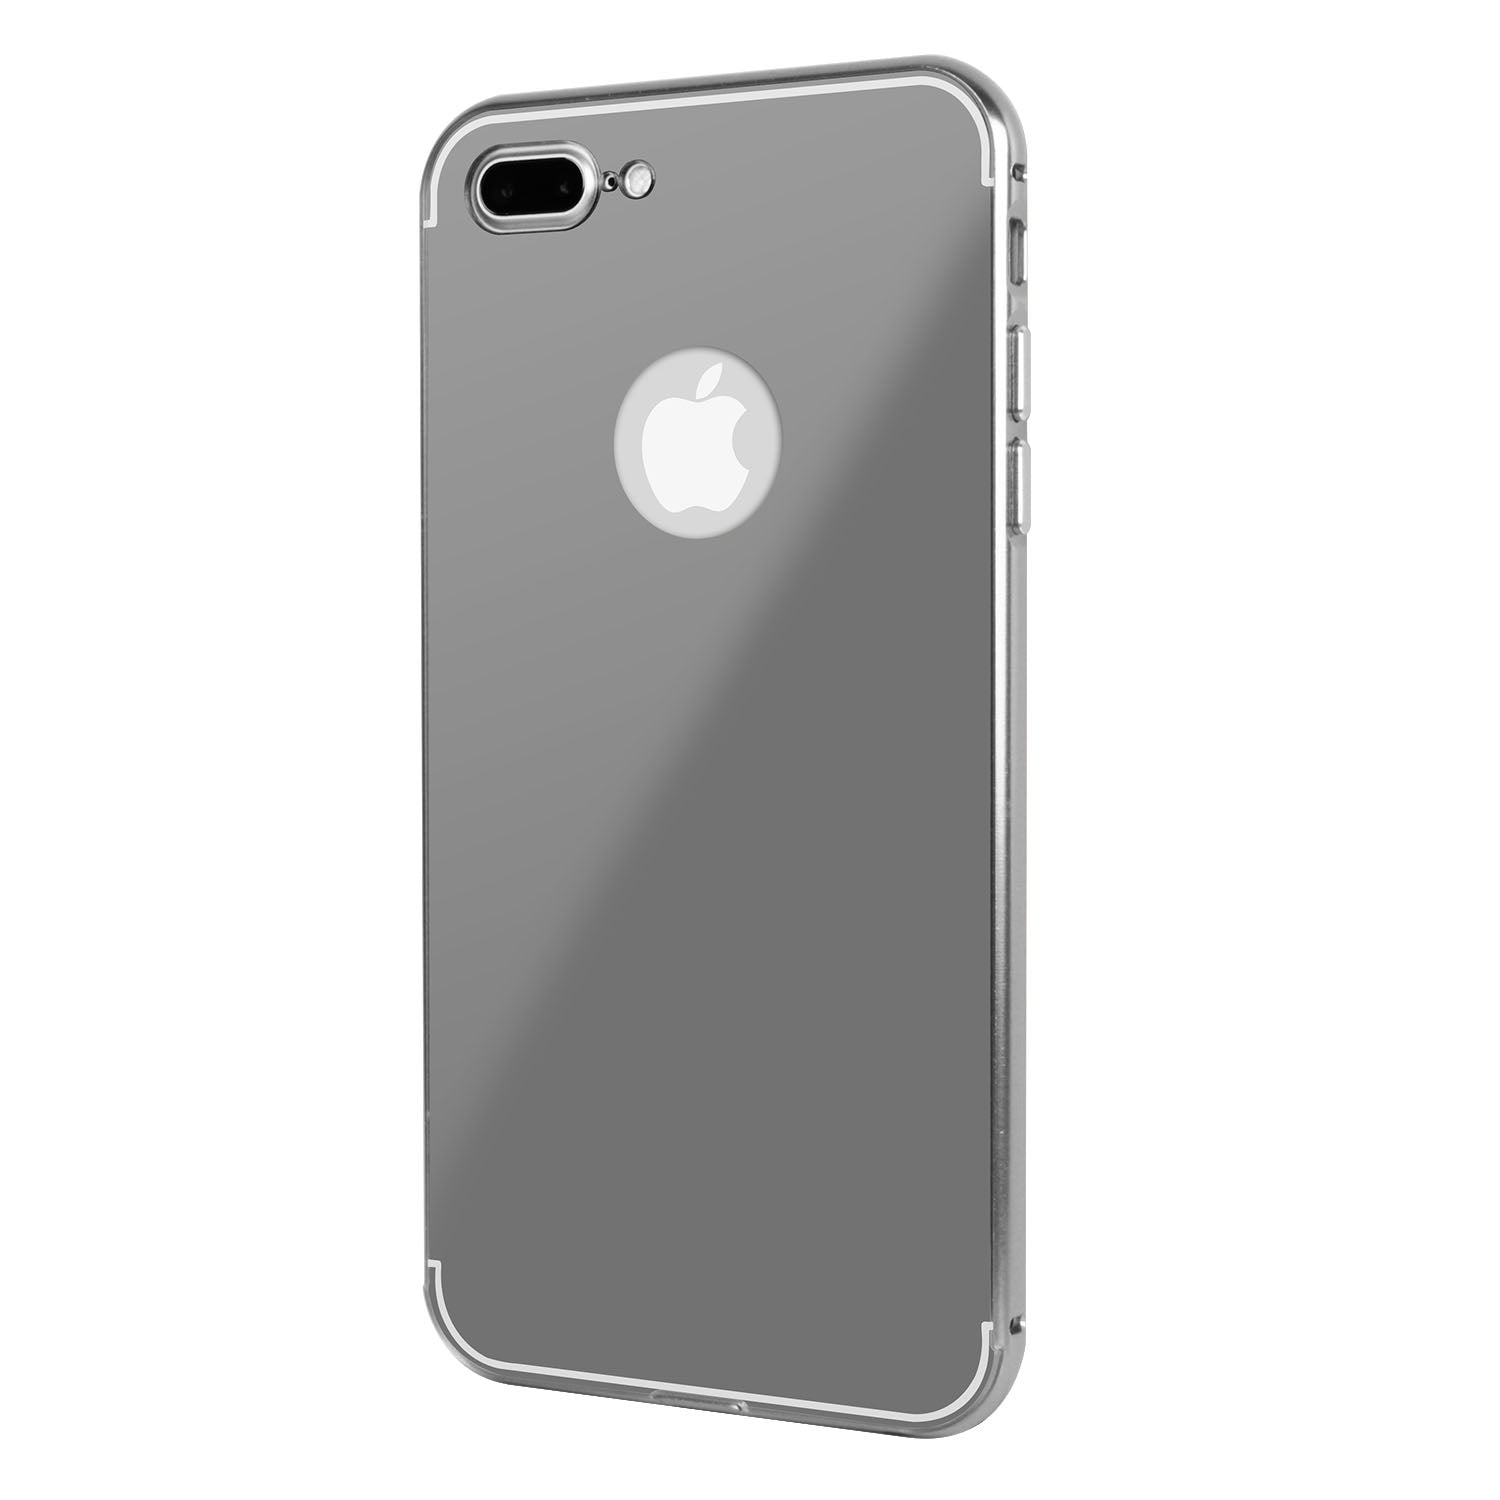 title:Slim Shock-resistant Mirror Case For iPhone 7;color:Black